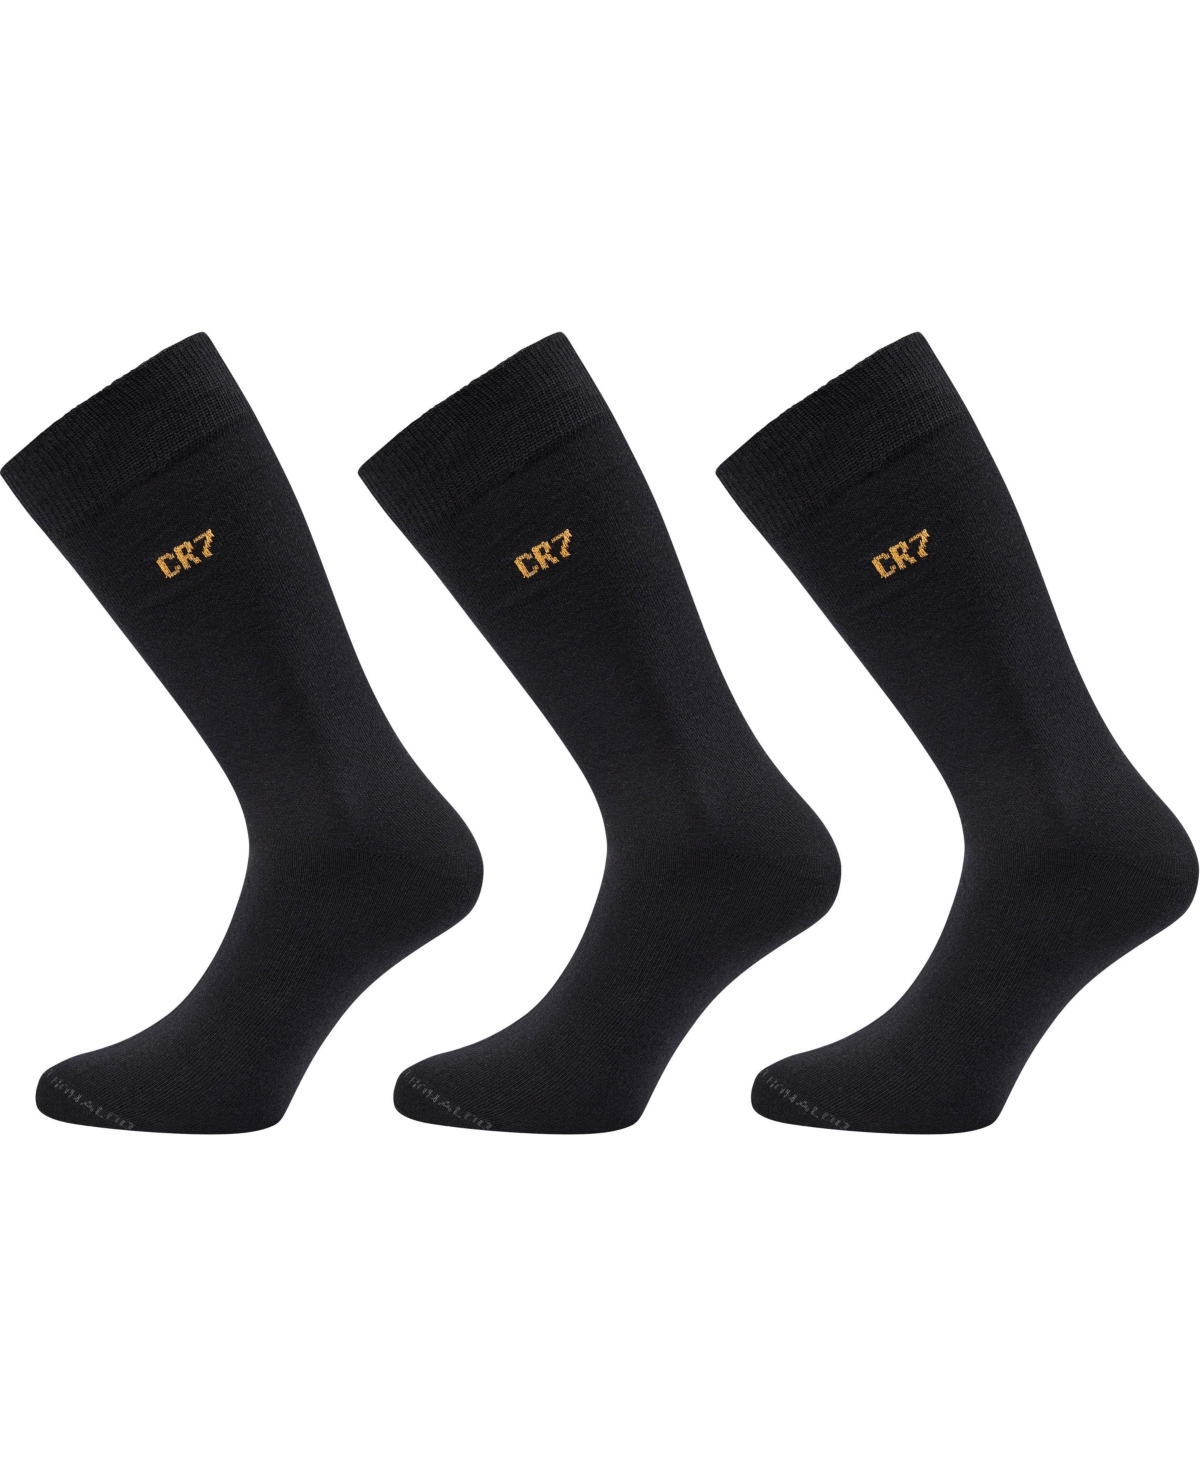 Men's Fashion Socks in Gift Box, Pack of 3 - Black